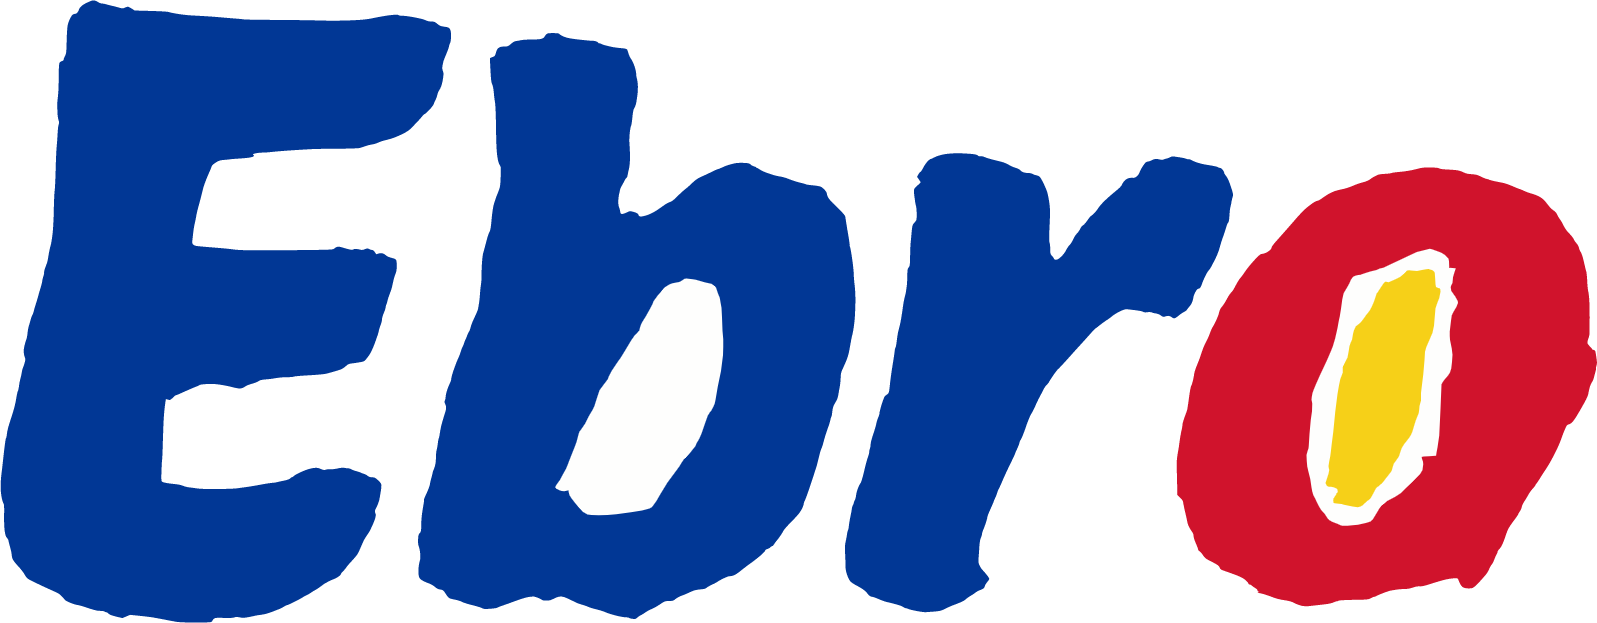 Ebro Foods
 logo (PNG transparent)